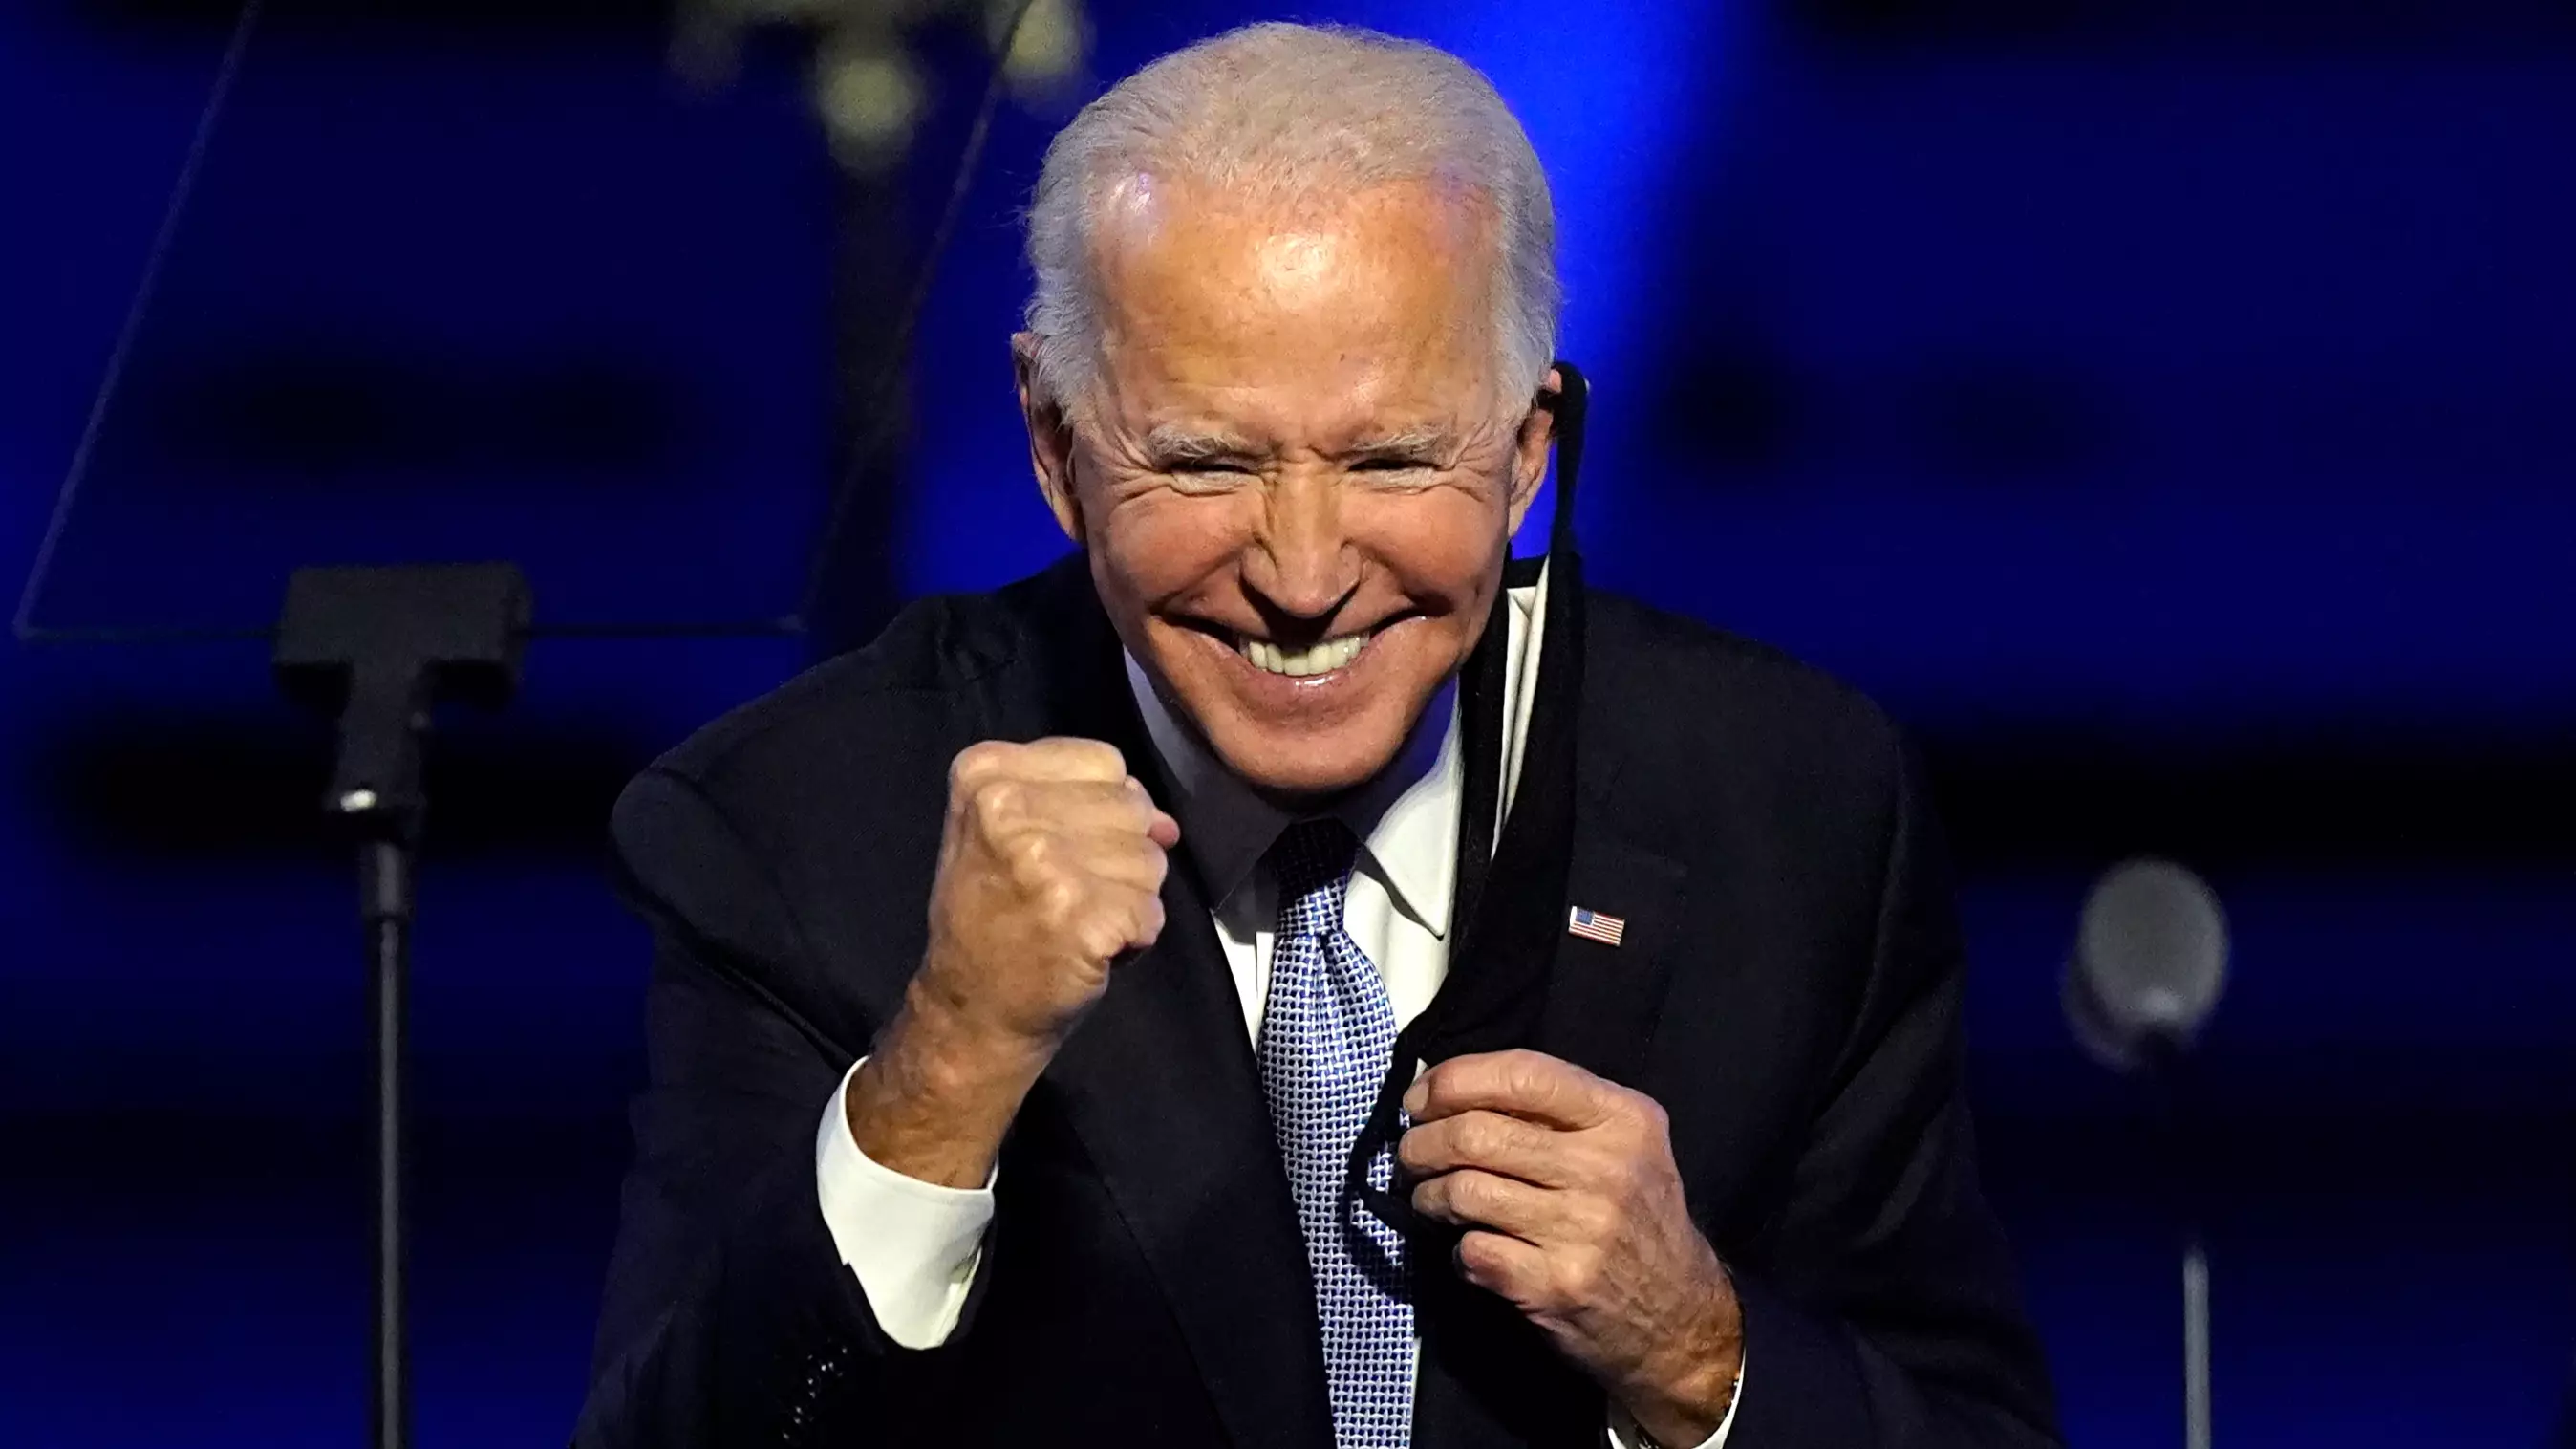 Joe Biden wins the US election (